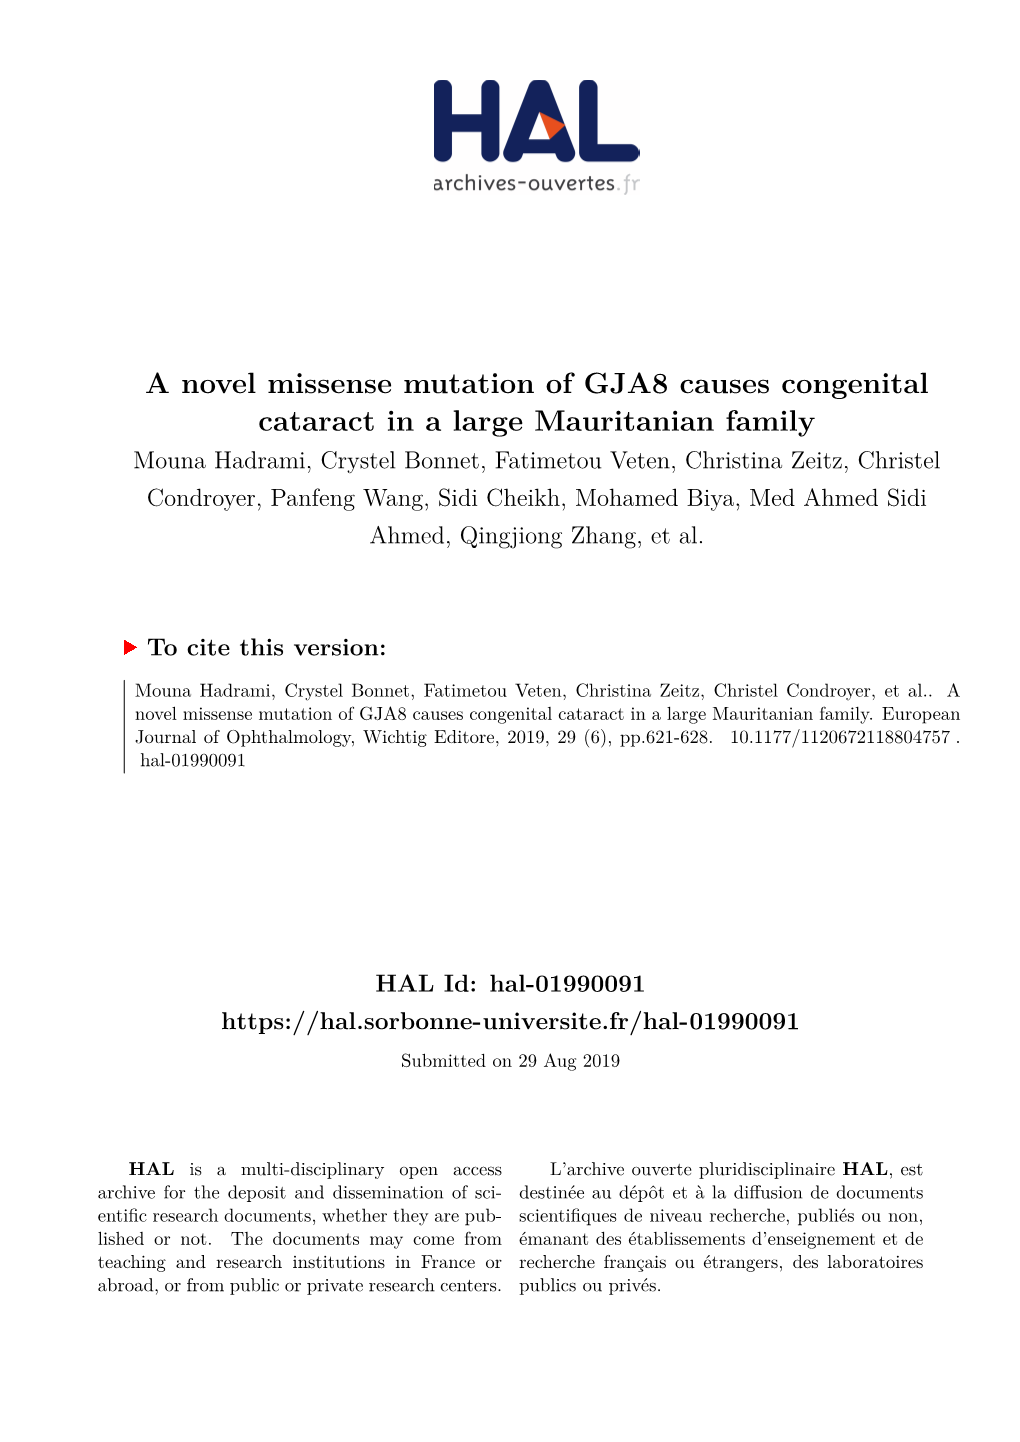 A Novel Missense Mutation of GJA8 Causes Congenital Cataract in A